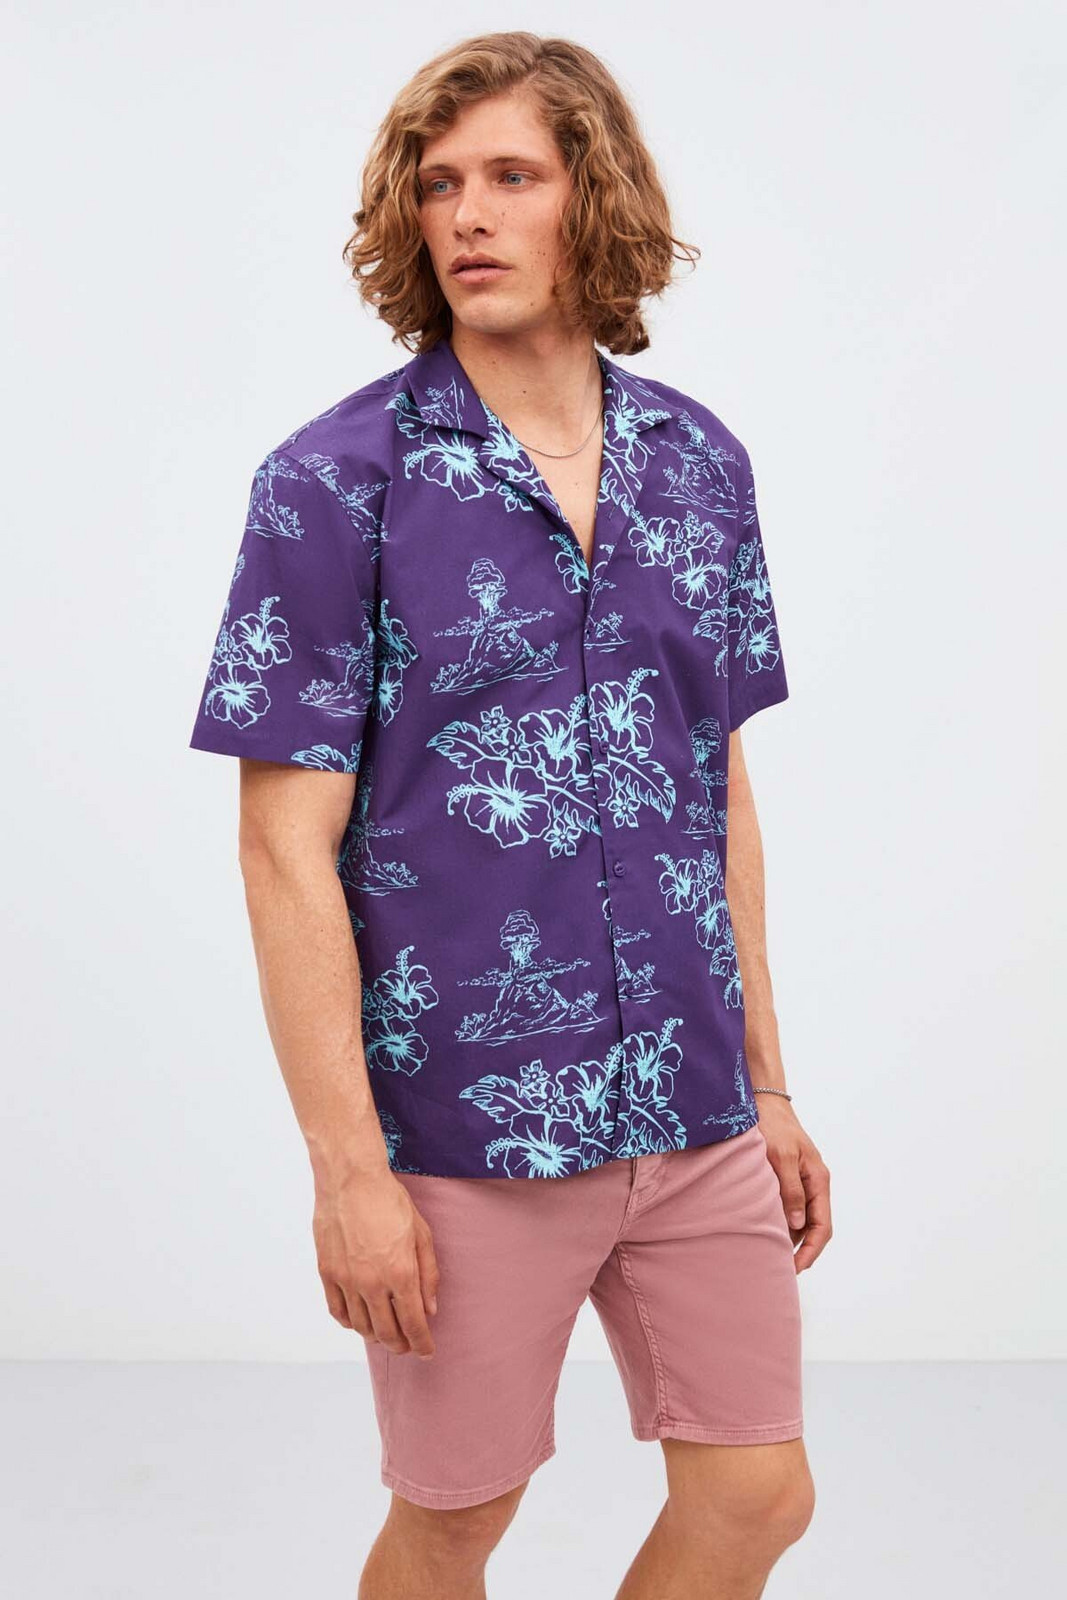 GRIMELANGE Almeira Men's 100% Cotton Poplin Fabric Patterned Summer Purple Shirt